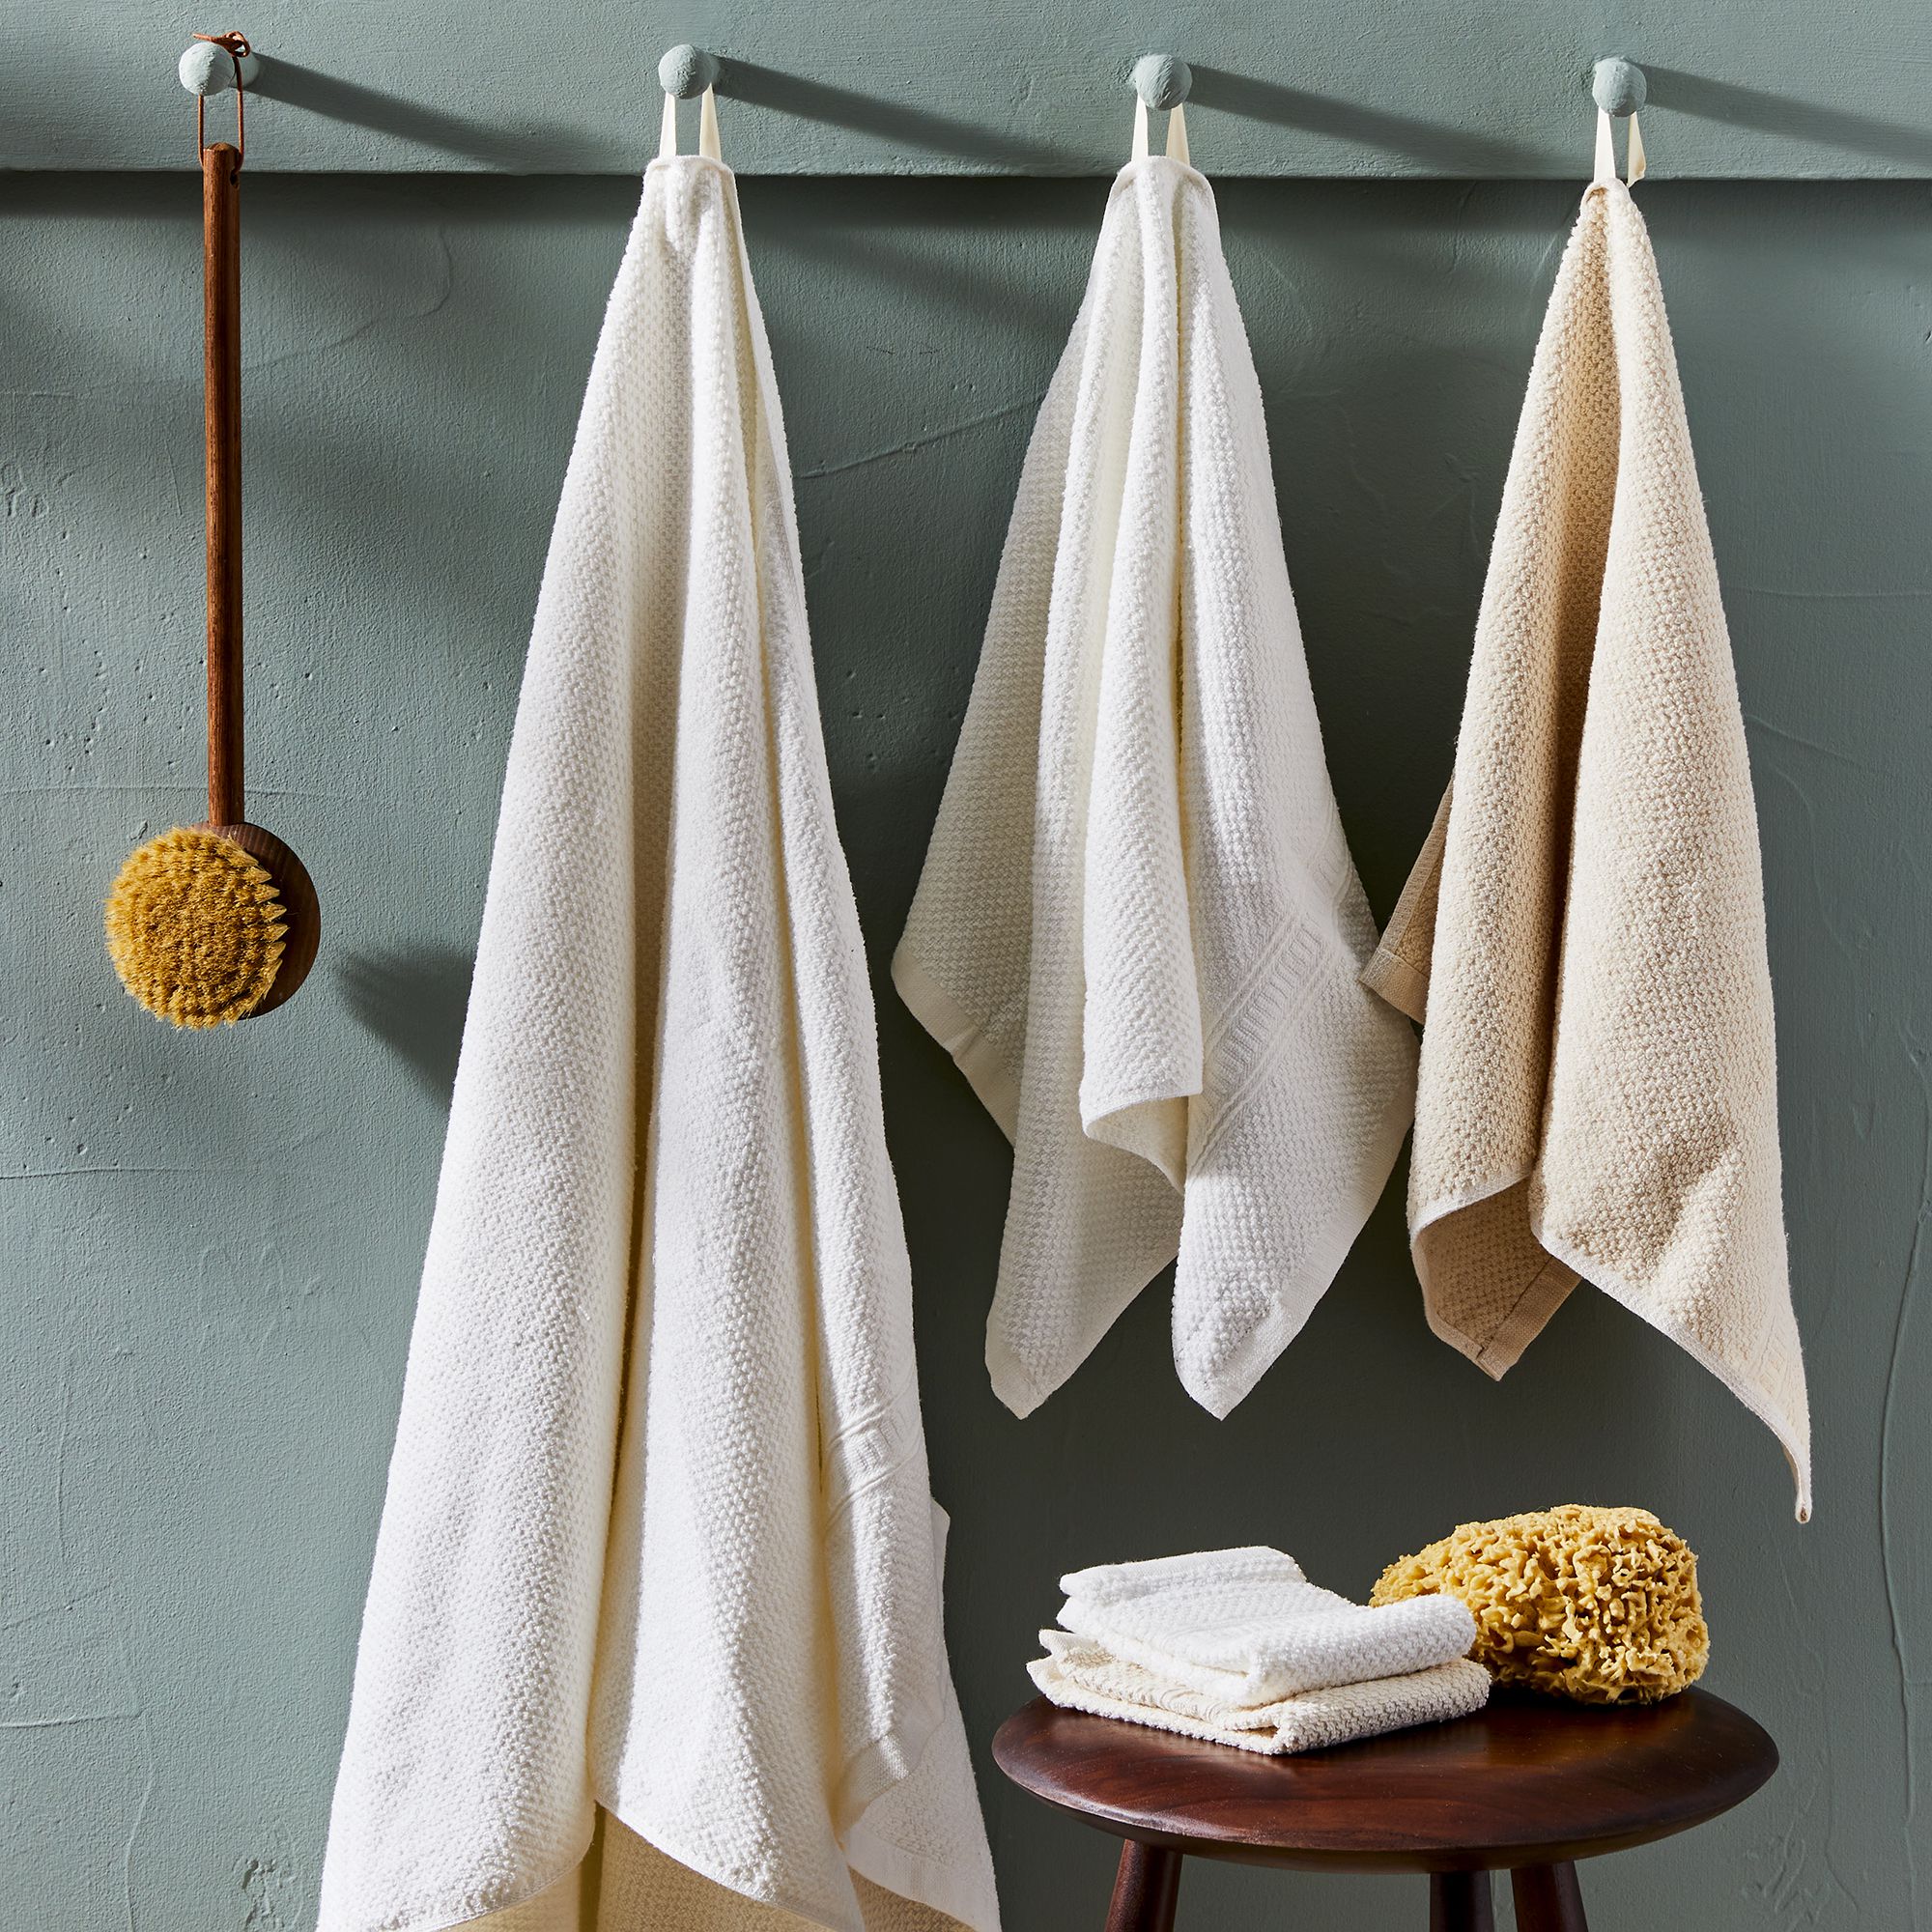 Anact Hemp Organic Bath Towels or Set, 2 Colors, 4 Sizes, 55% Hemp